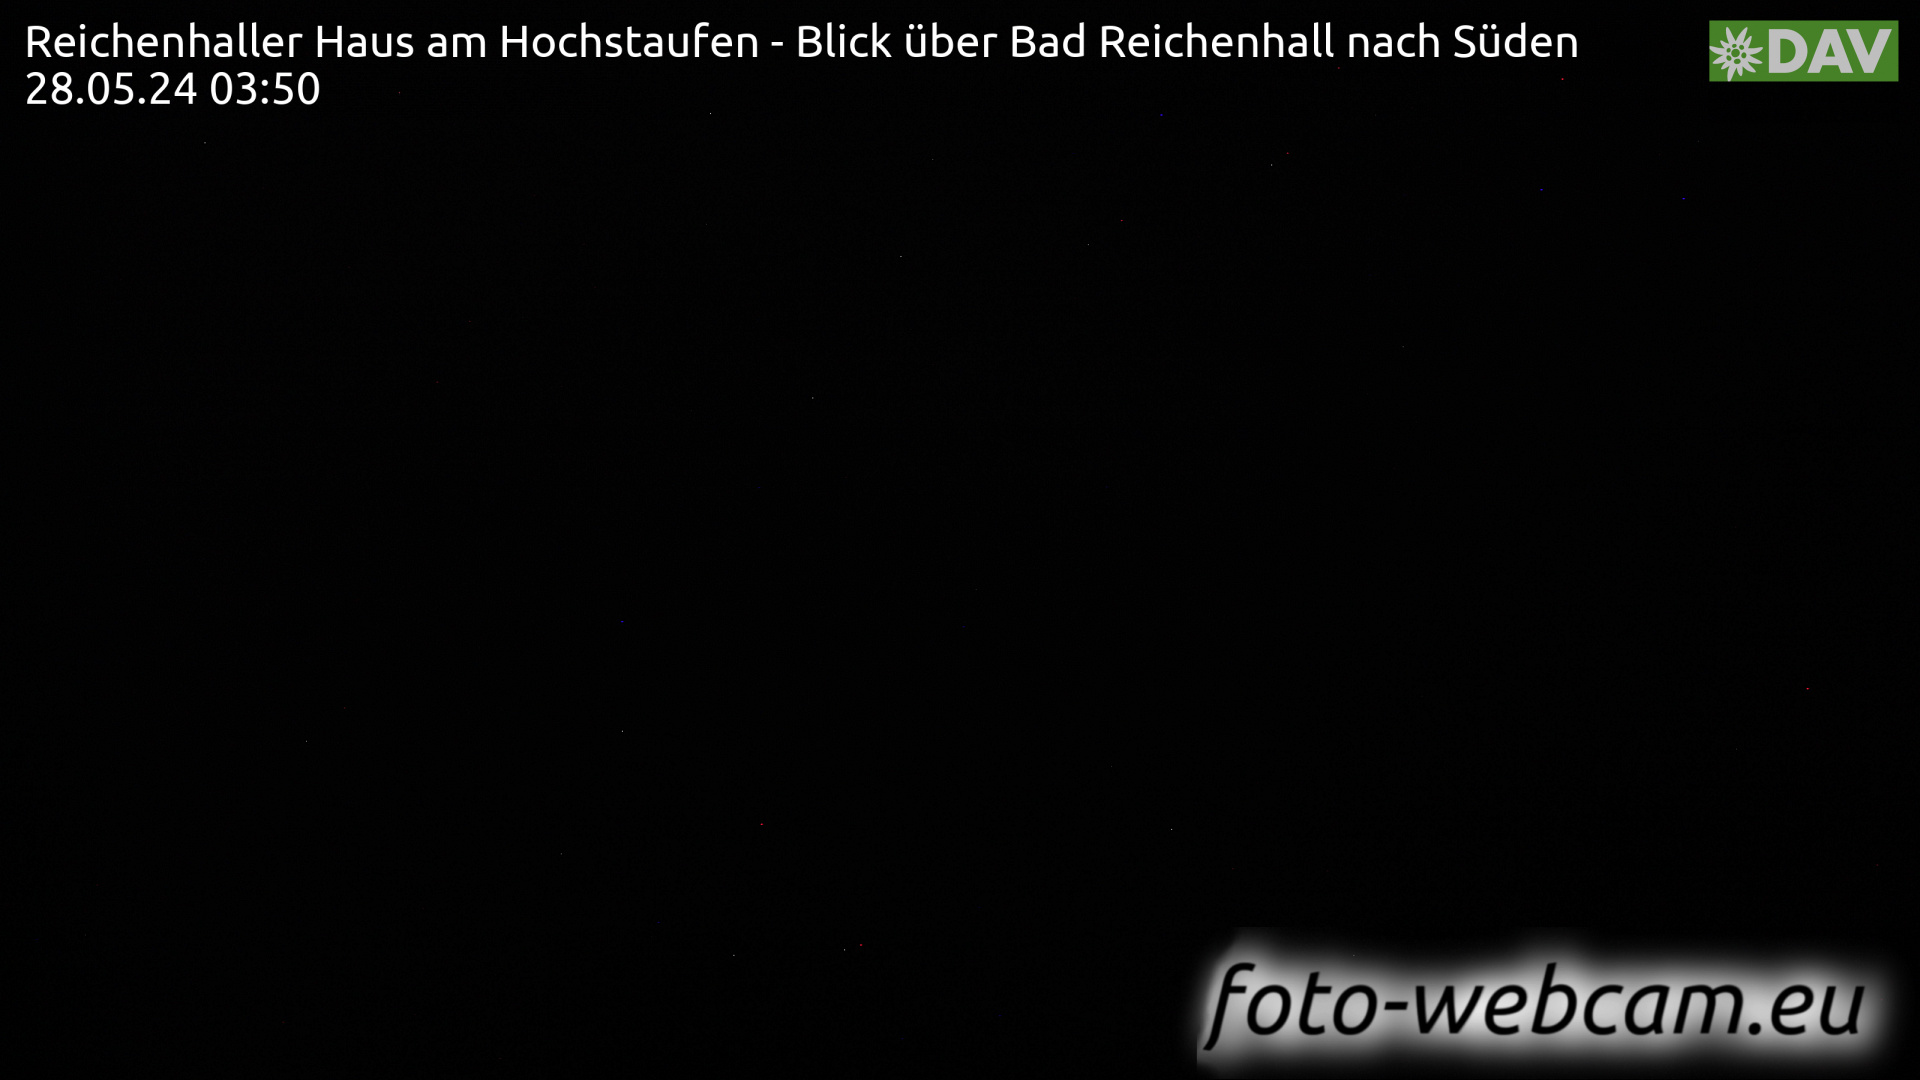 Bad Reichenhall So. 03:55